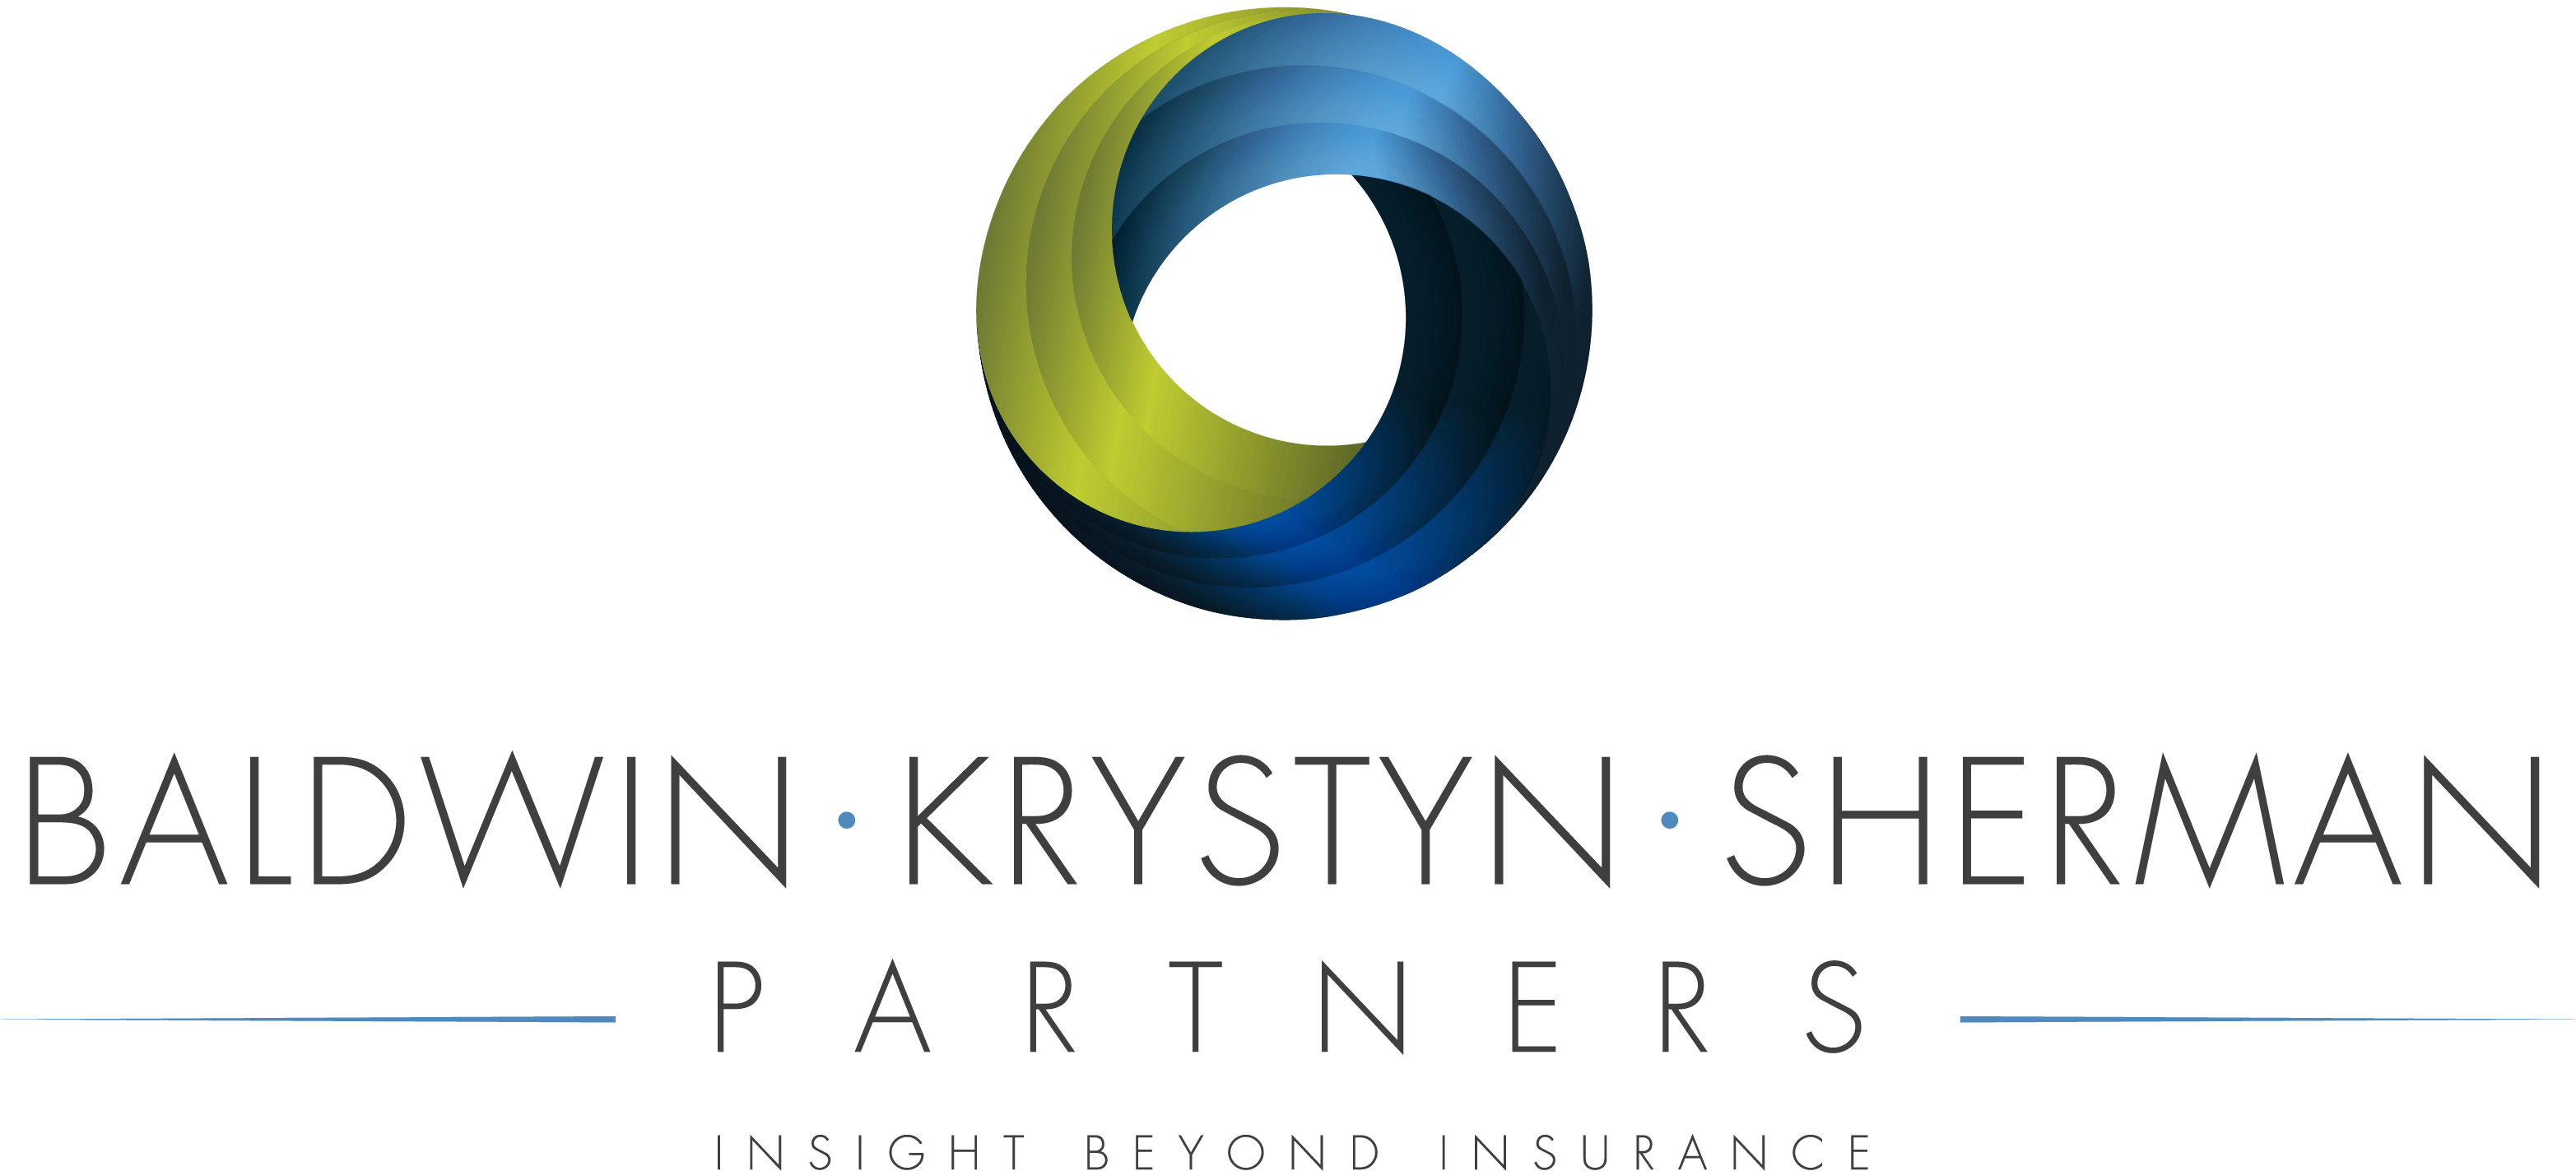 Baldwin Logo - Baldwin Krystyn Sherman - New logo - BKS-Partners